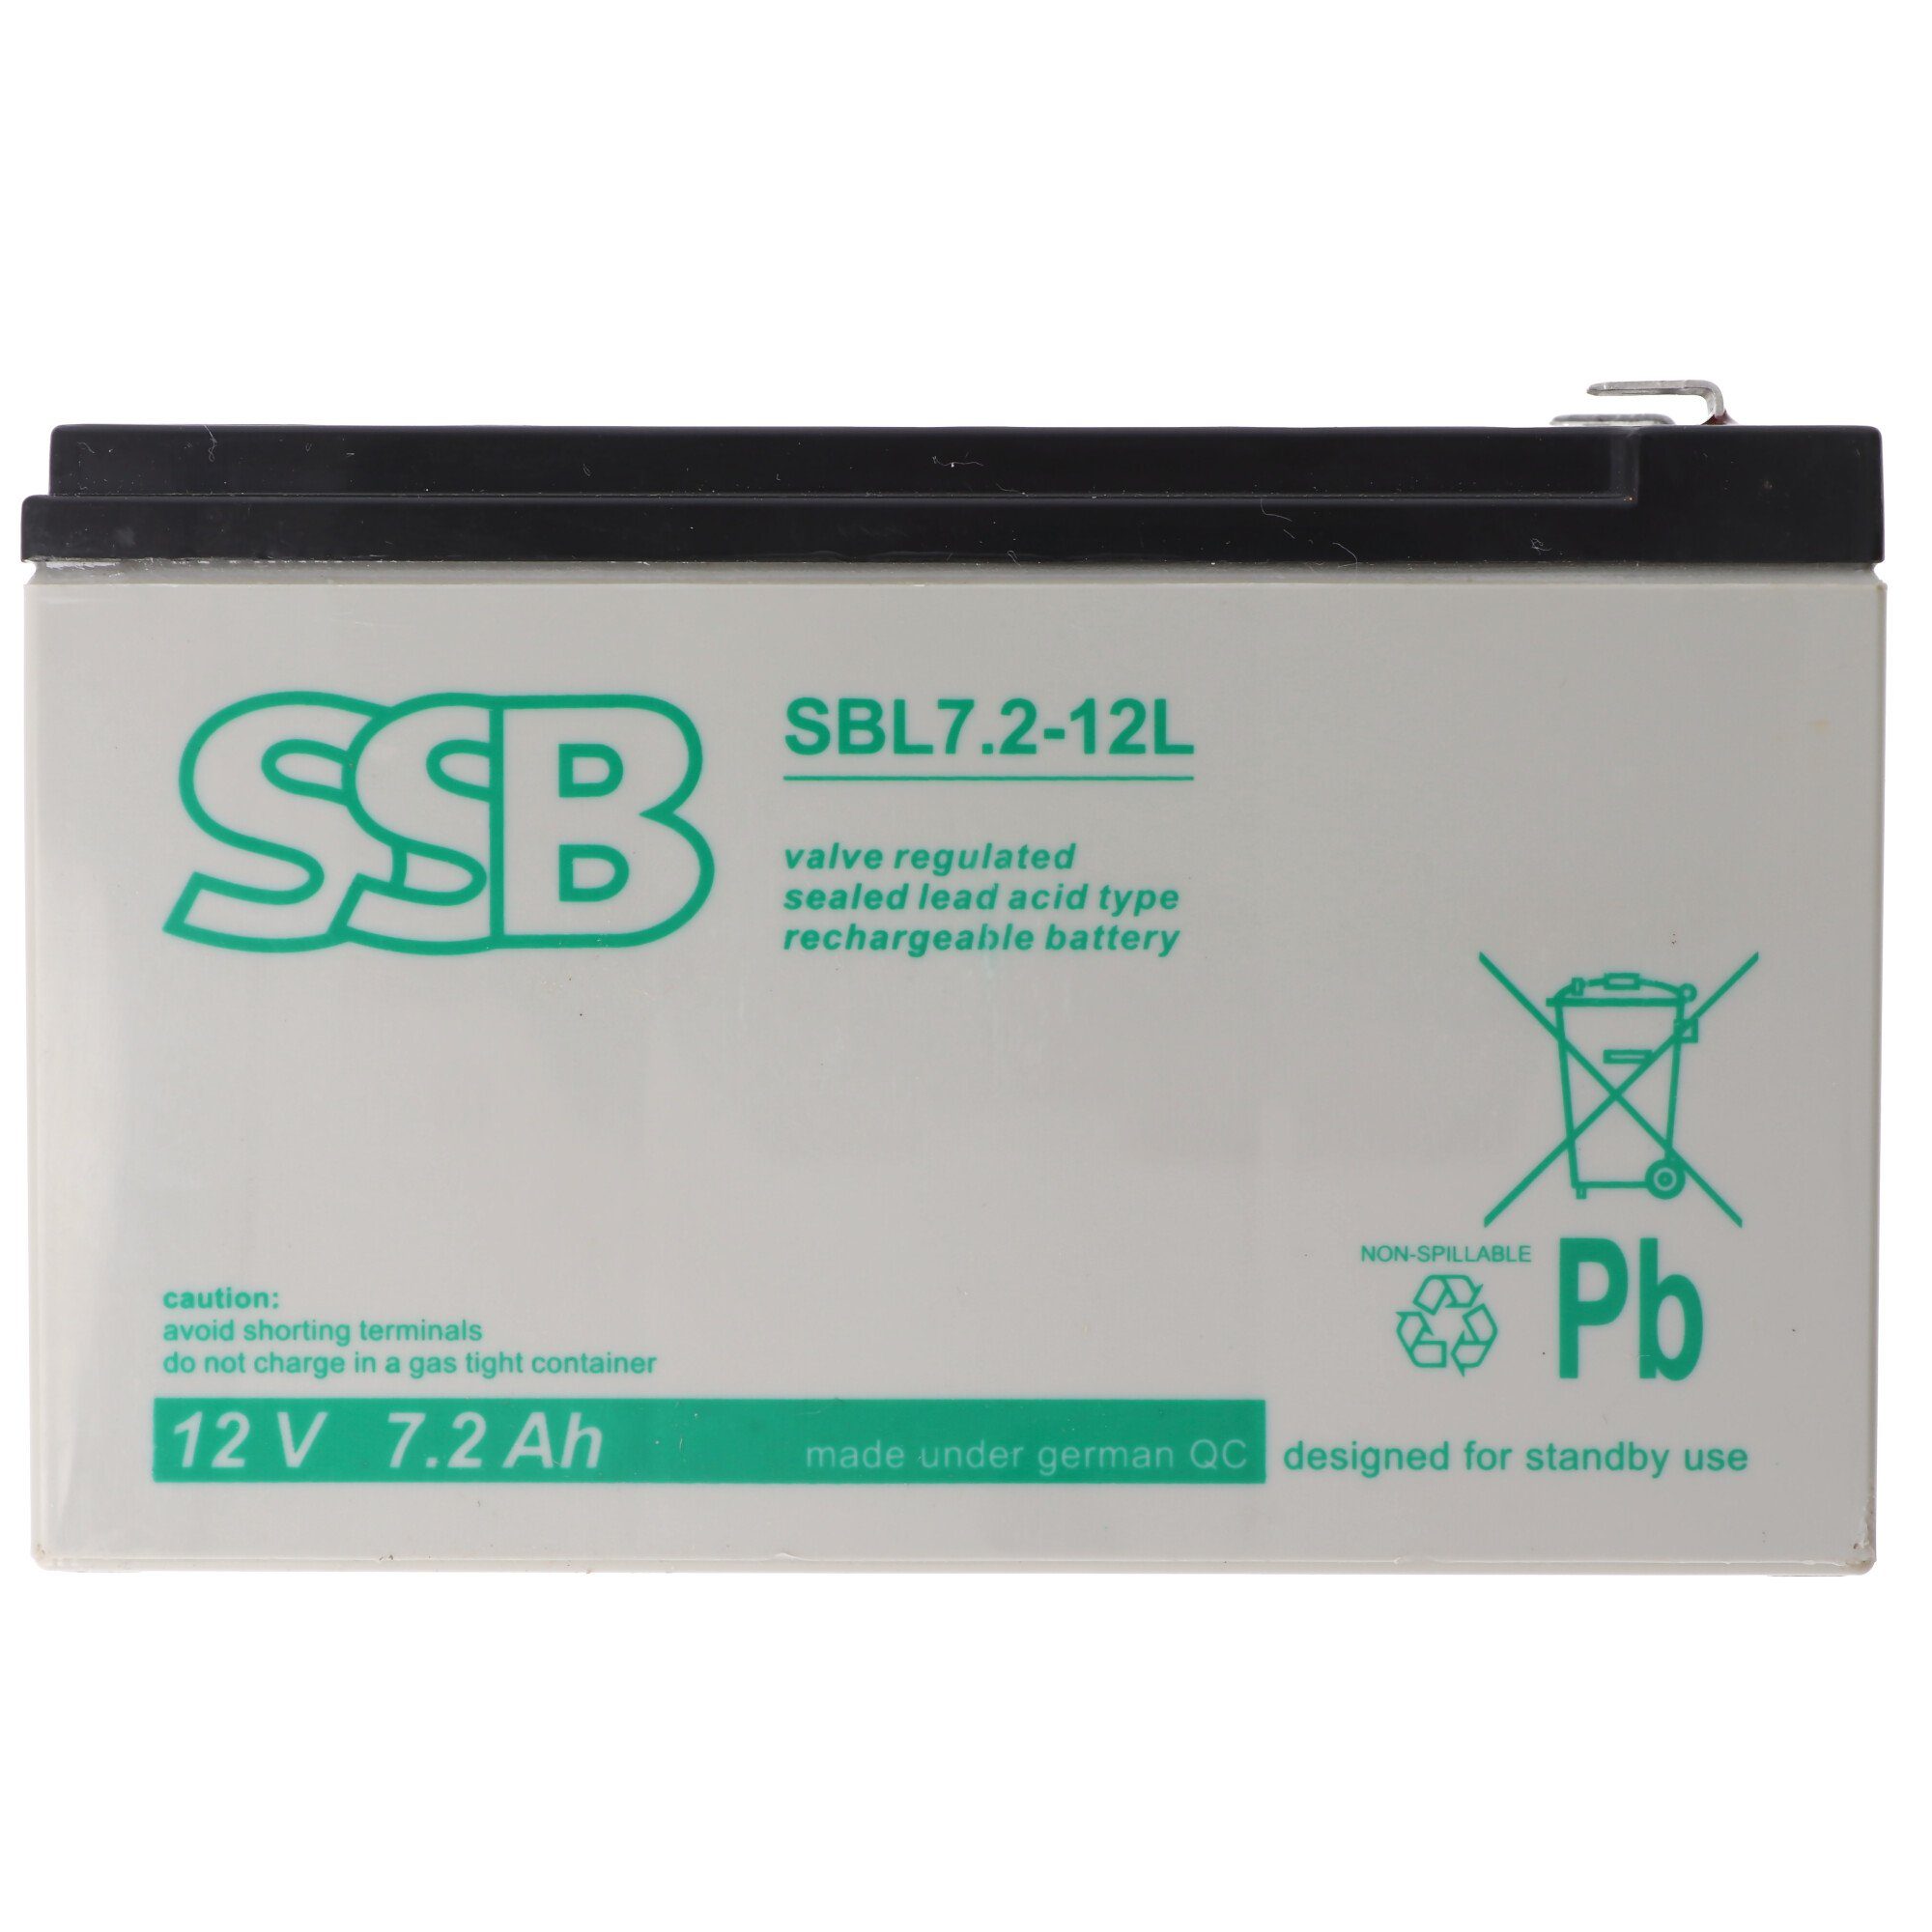 SSB Battery SSB Gel SBL7.2-12L Akku 7,2Ah 6,3mm 12V Akku Bleiakku Faston Blei AGM